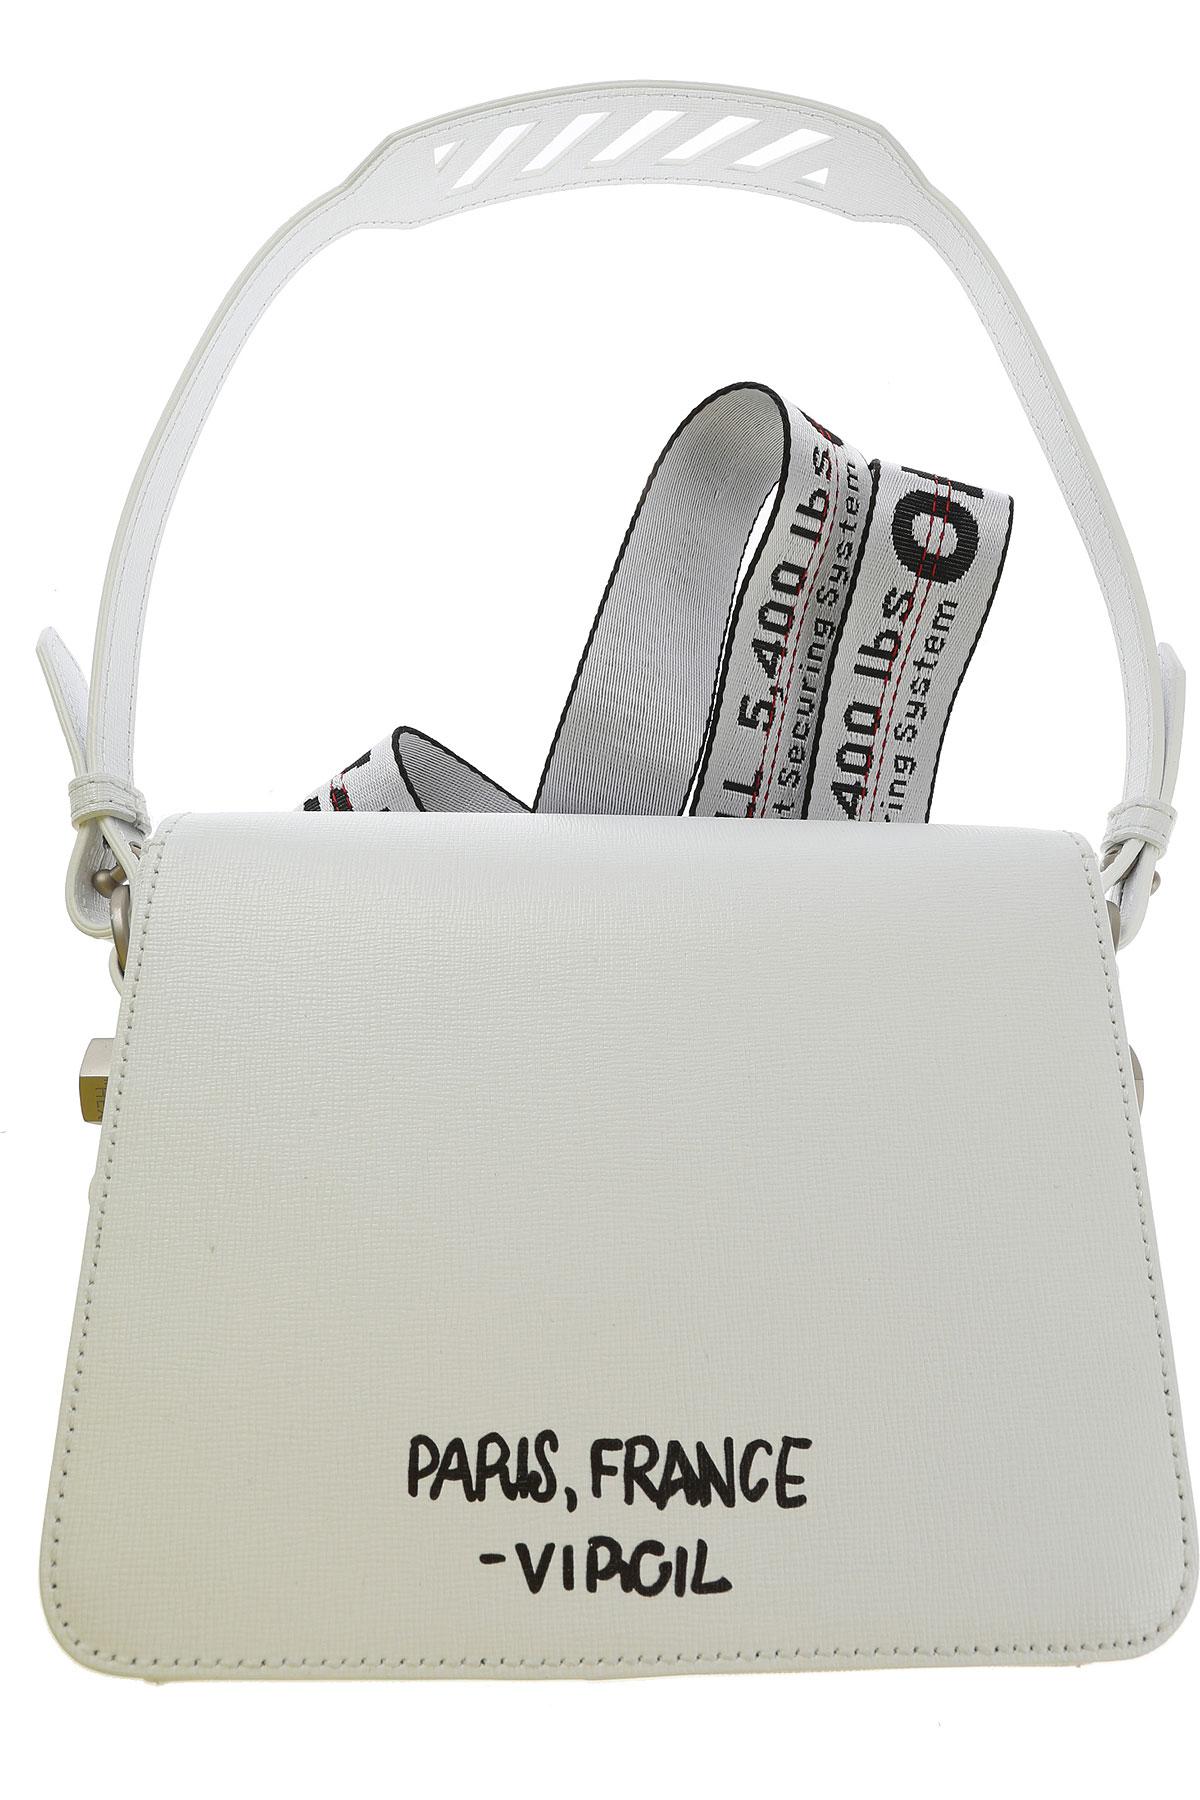 Off-White c/o Virgil Abloh Shoulder Bag For Women On Sale in White - Lyst